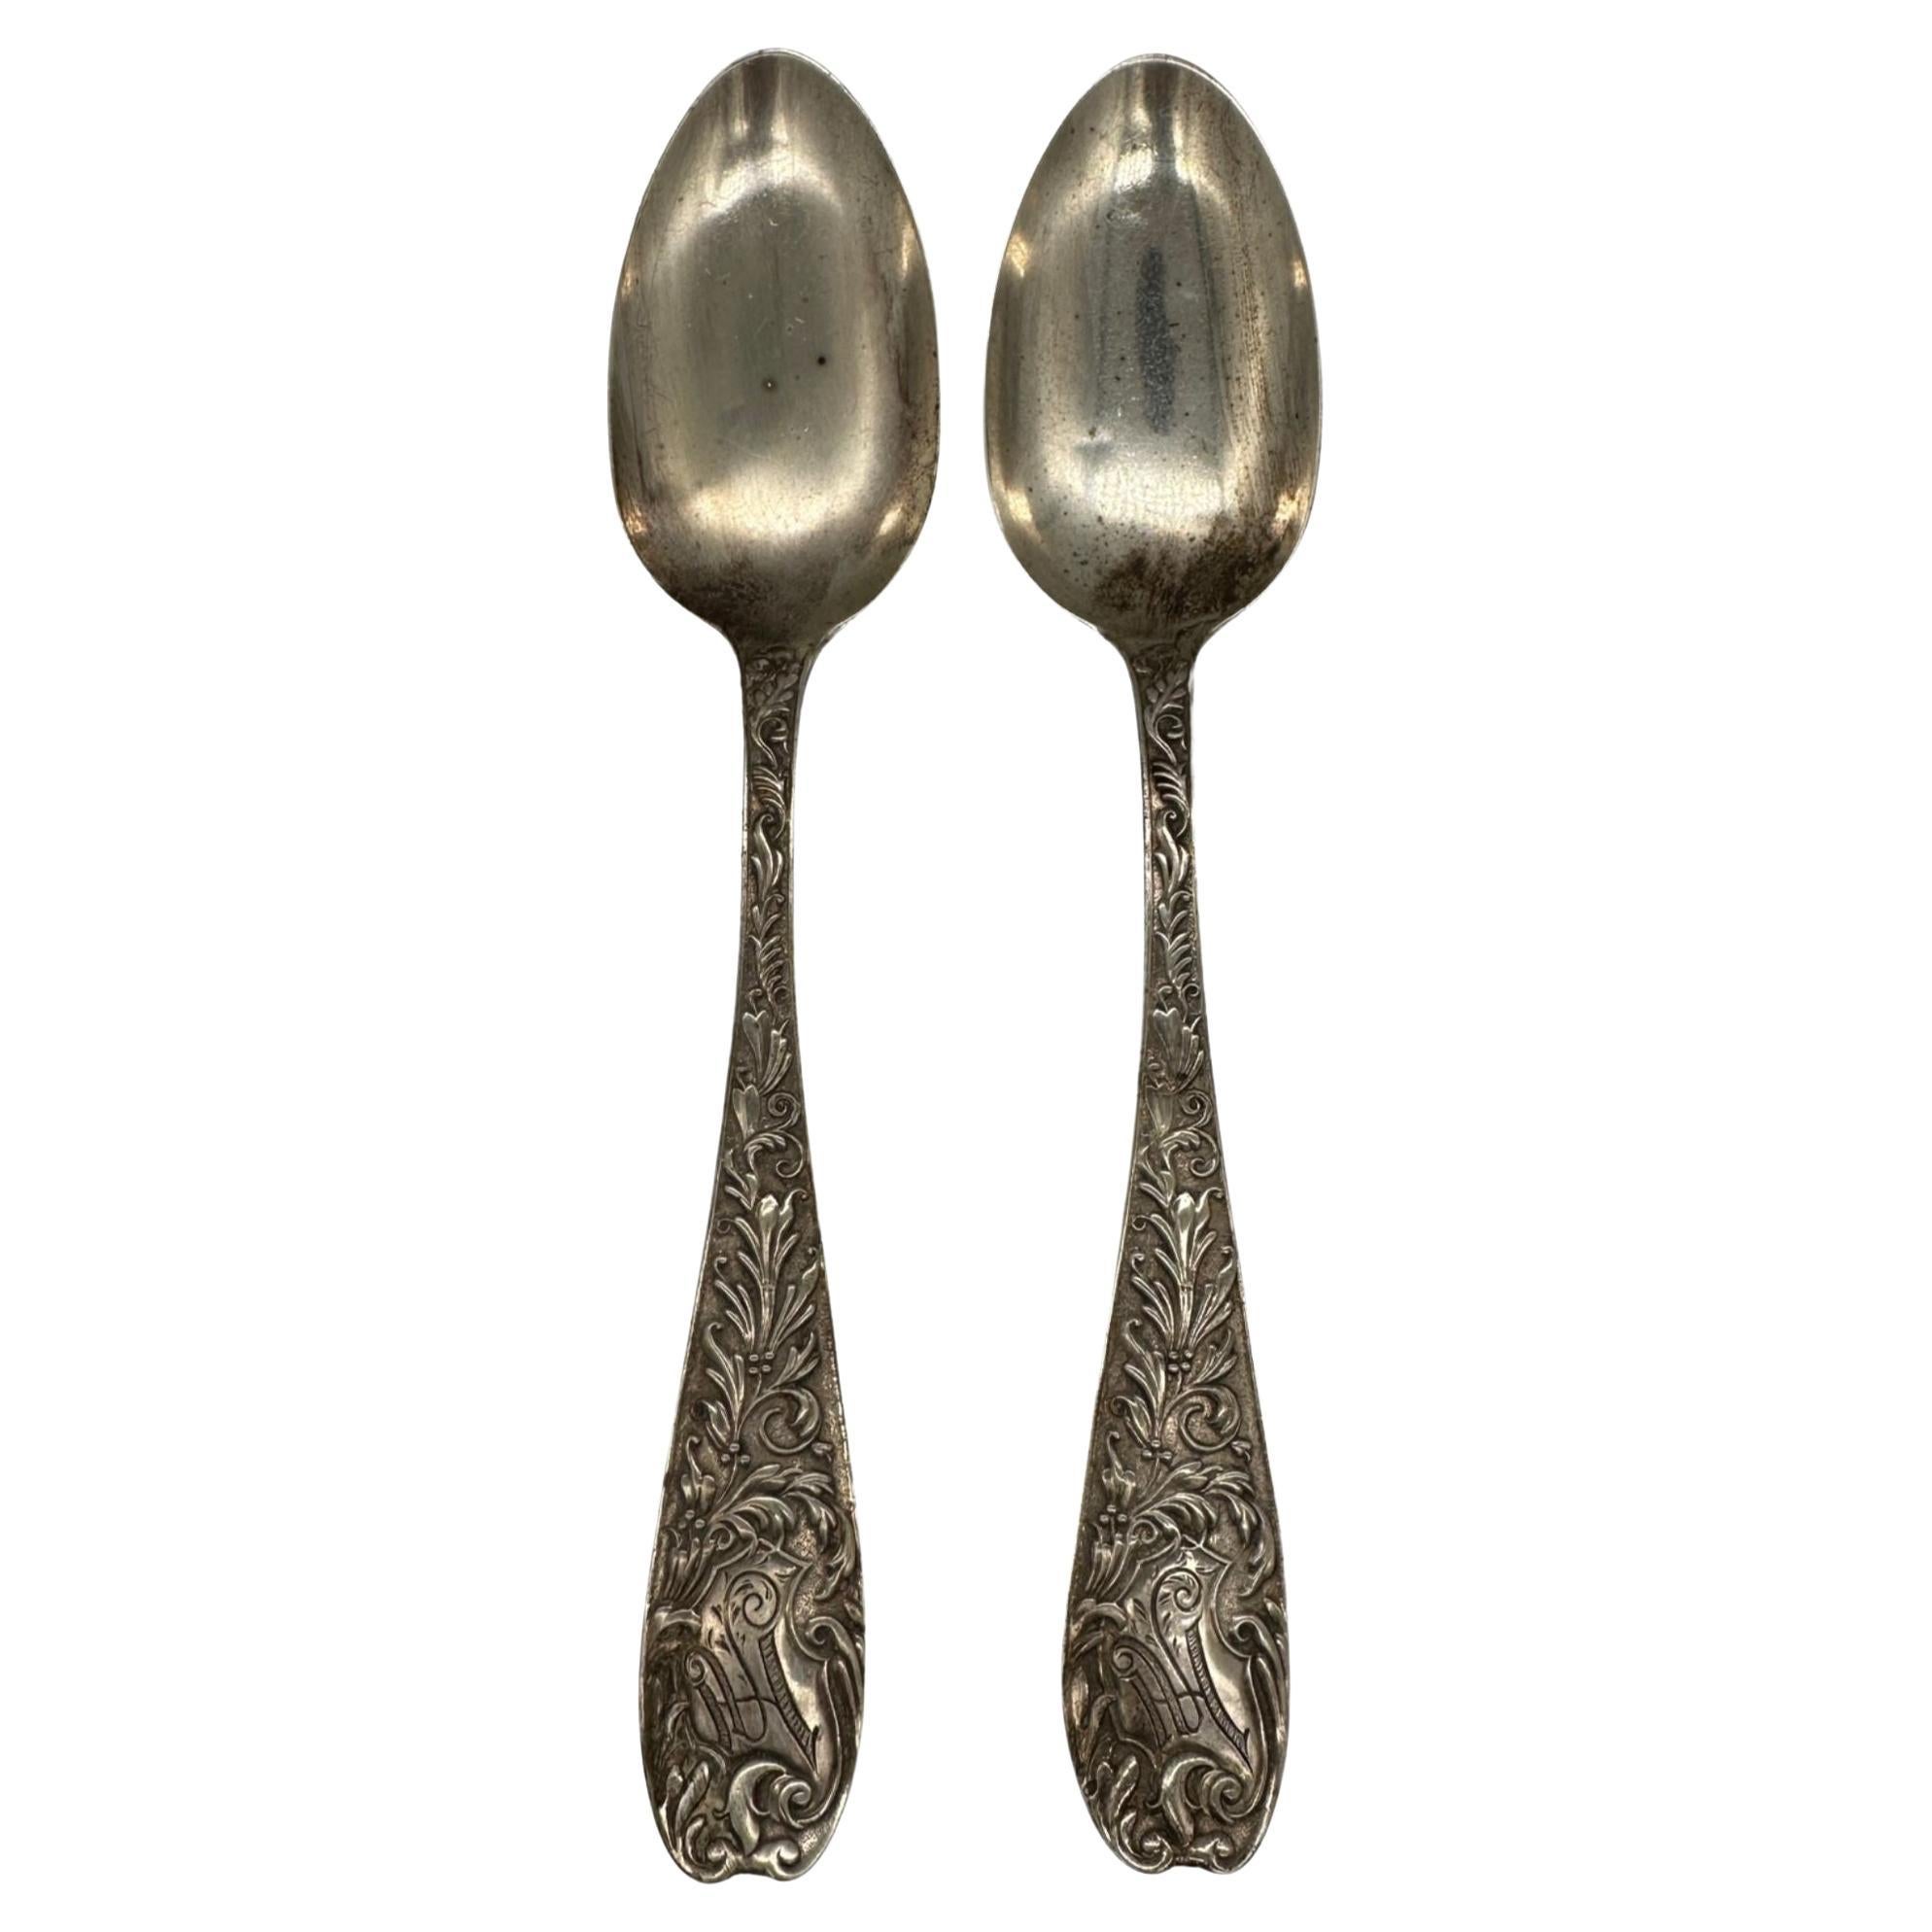 J D & S M Knowles Co Sterling Silver Serving Spoon Aeolian Pattern, 1882 For Sale